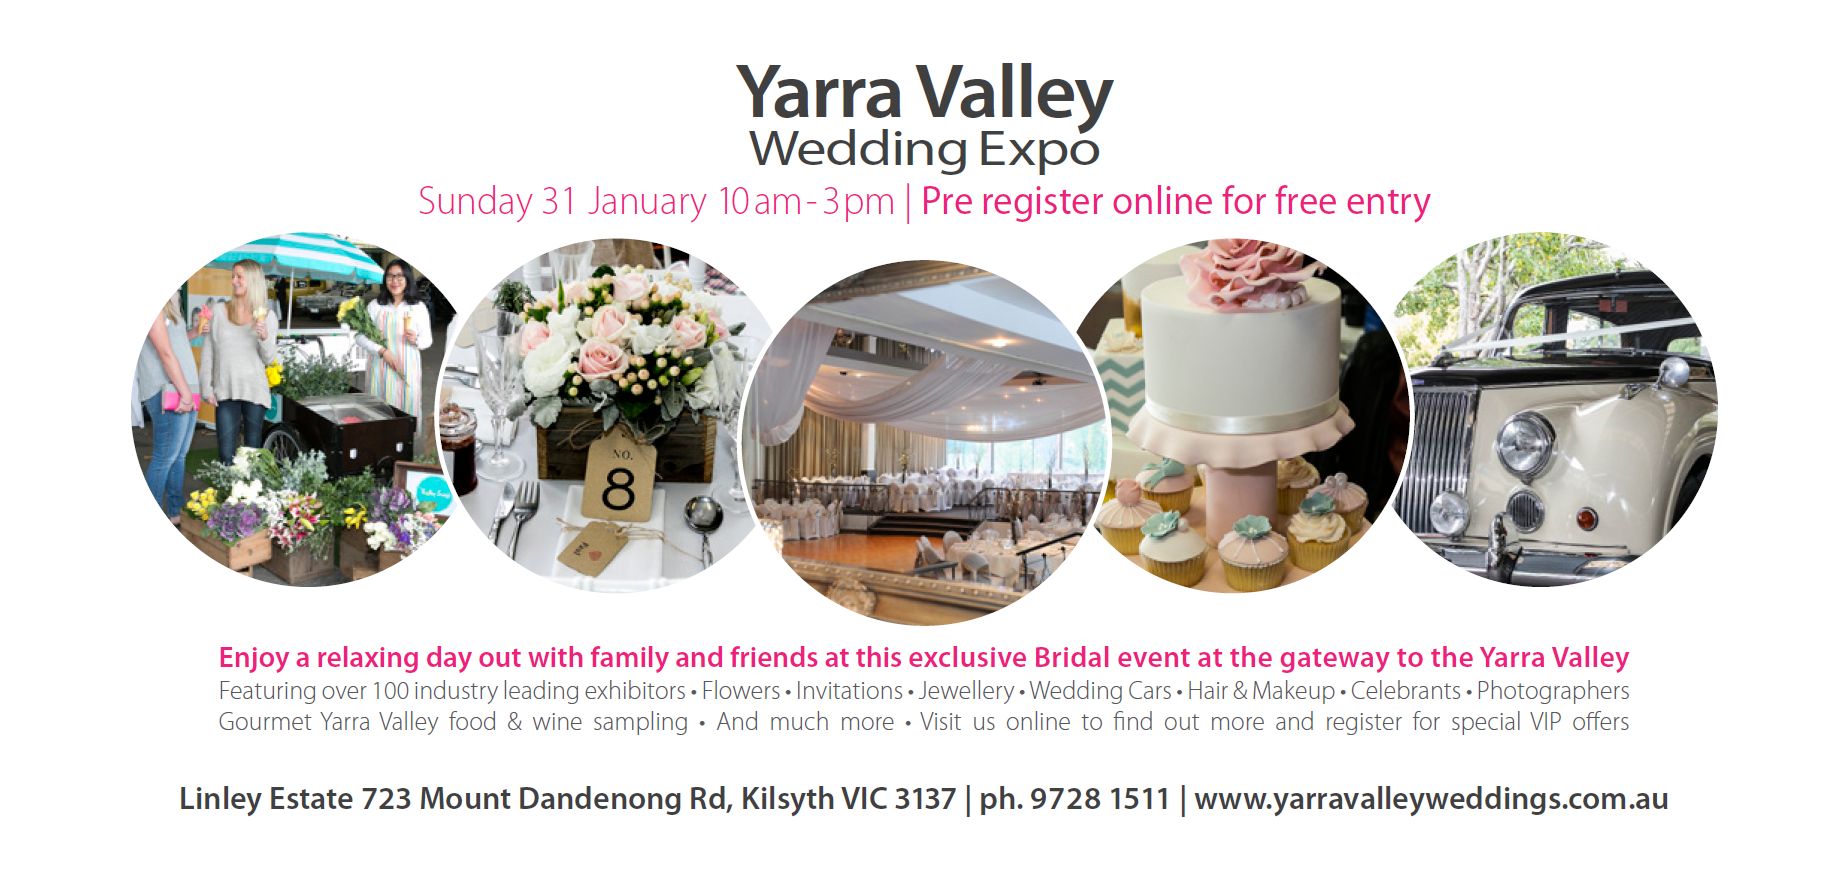 yarra_valley_wedding_expo_banner_02